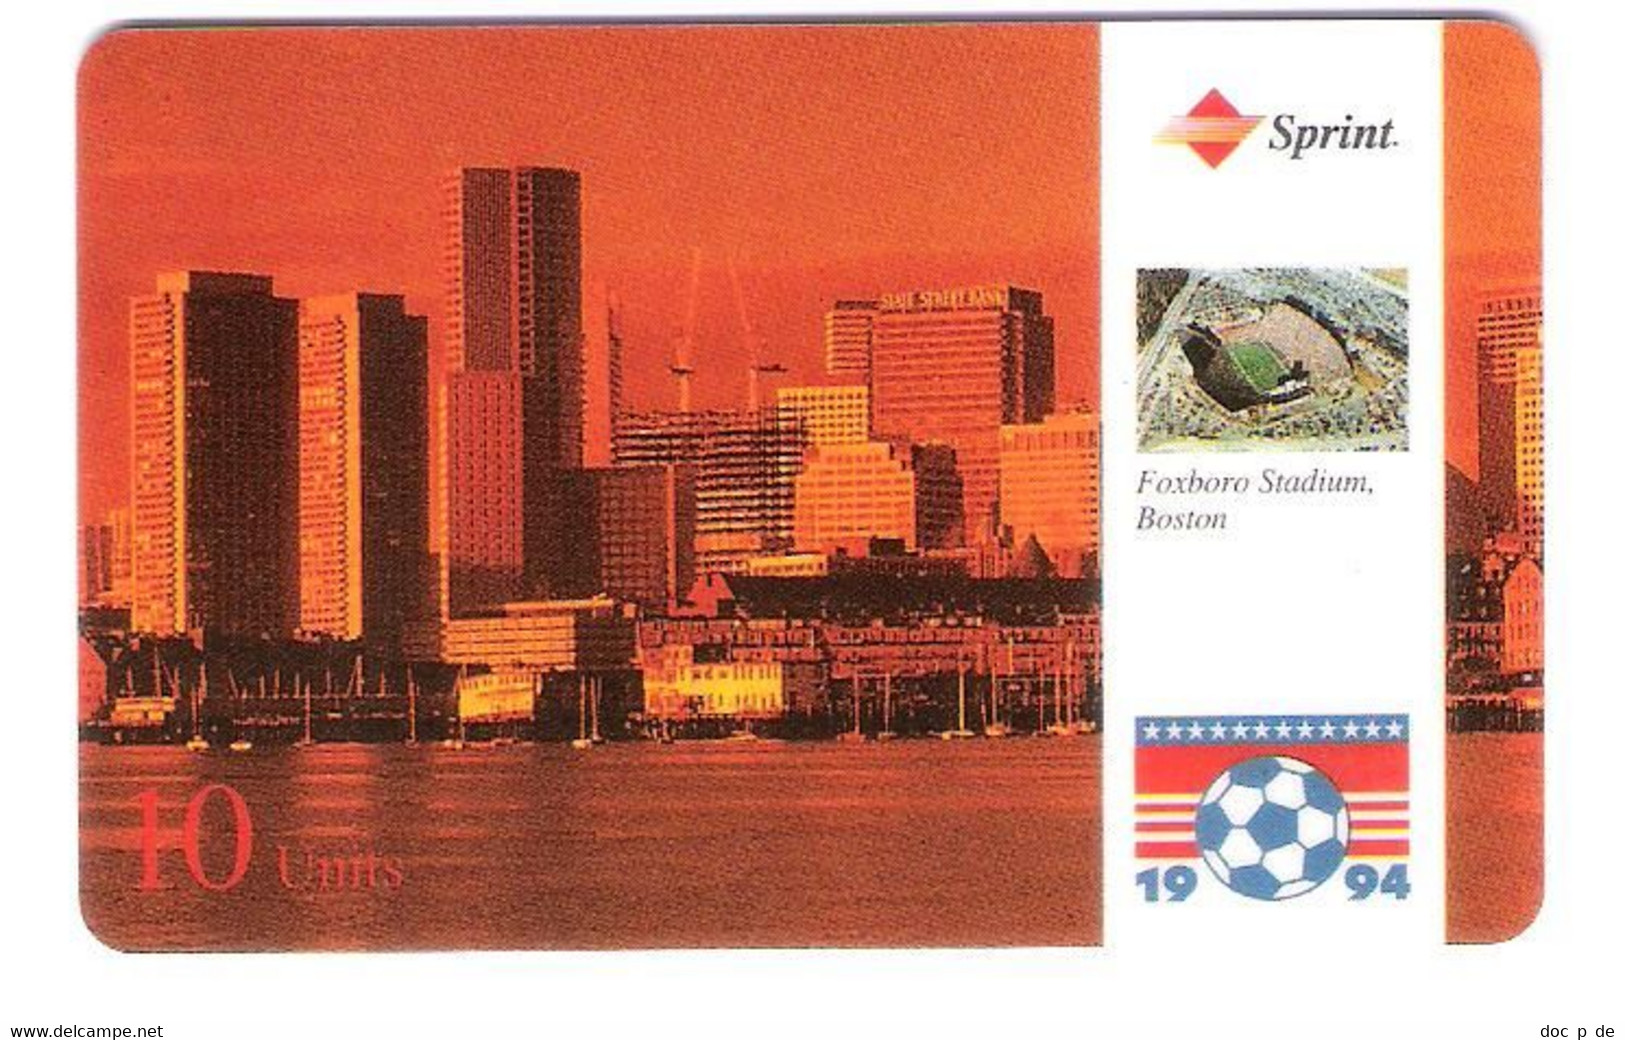 USA - Prepaid Card - Sprint - Football - Fussball - Soccer World Cup USA 94  - Foxboro Stadium Boston - Sprint